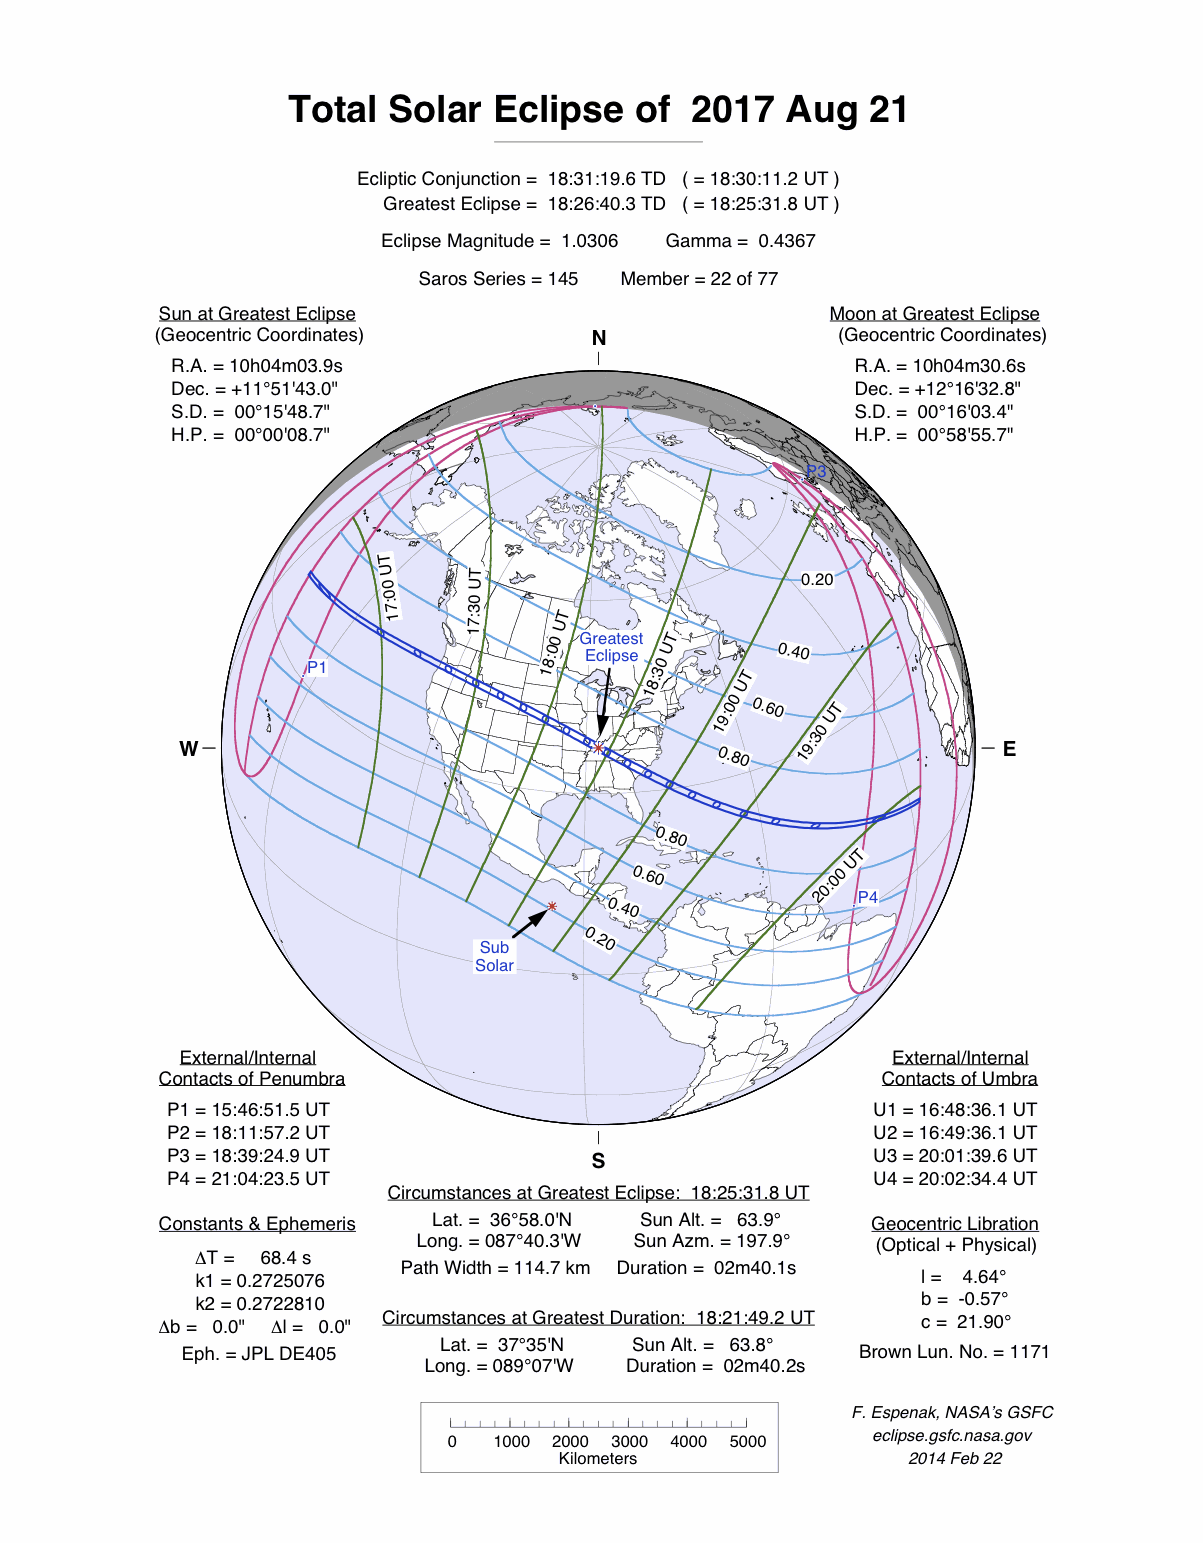 https://eclipse.gsfc.nasa.gov/SEplot/SEplot2001/SE2017Aug21T.GIF